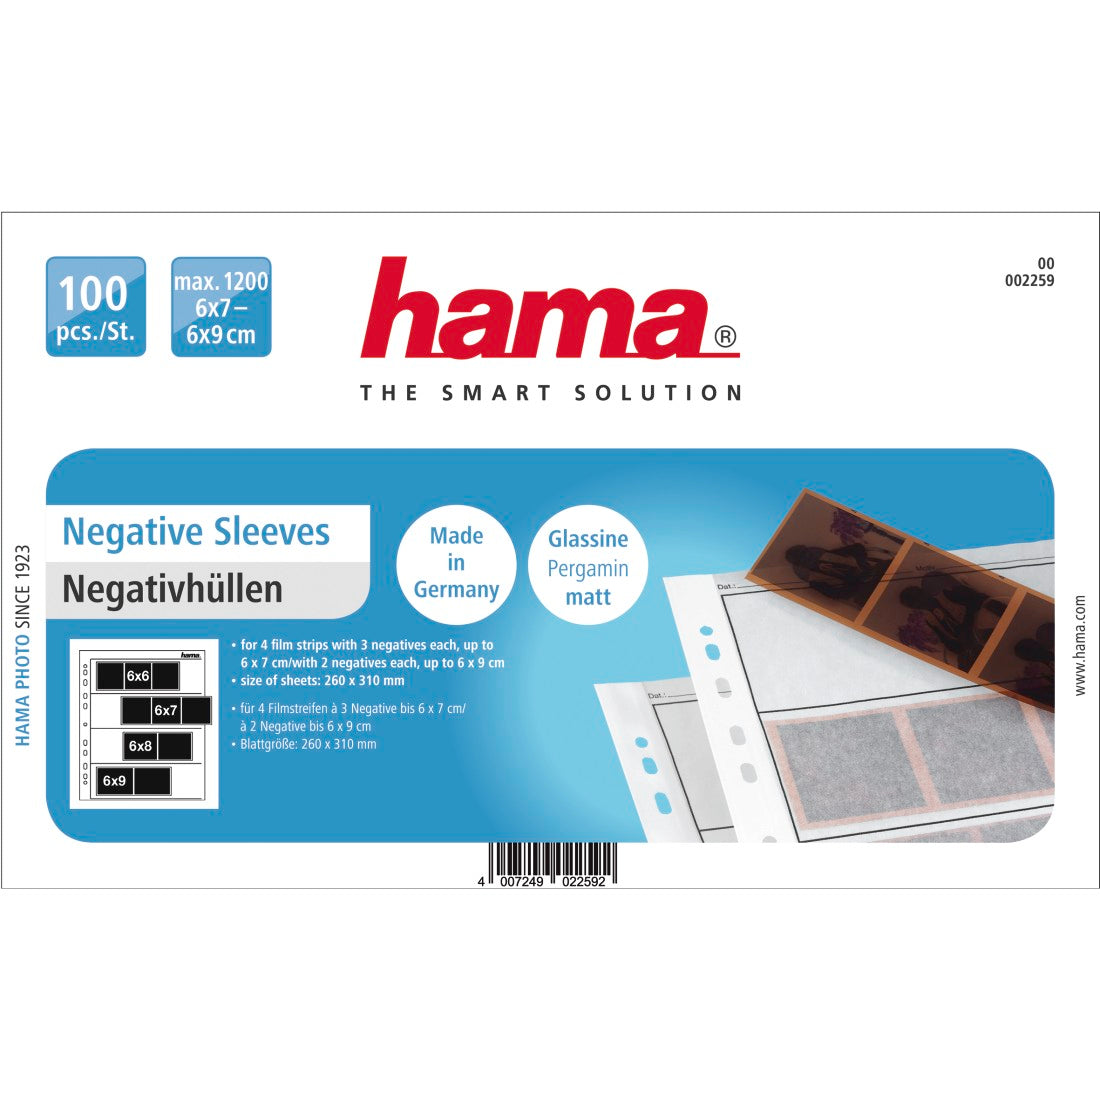 Hama Pergamine Negative Sleeves for 120 / 220 film, 100 pcs